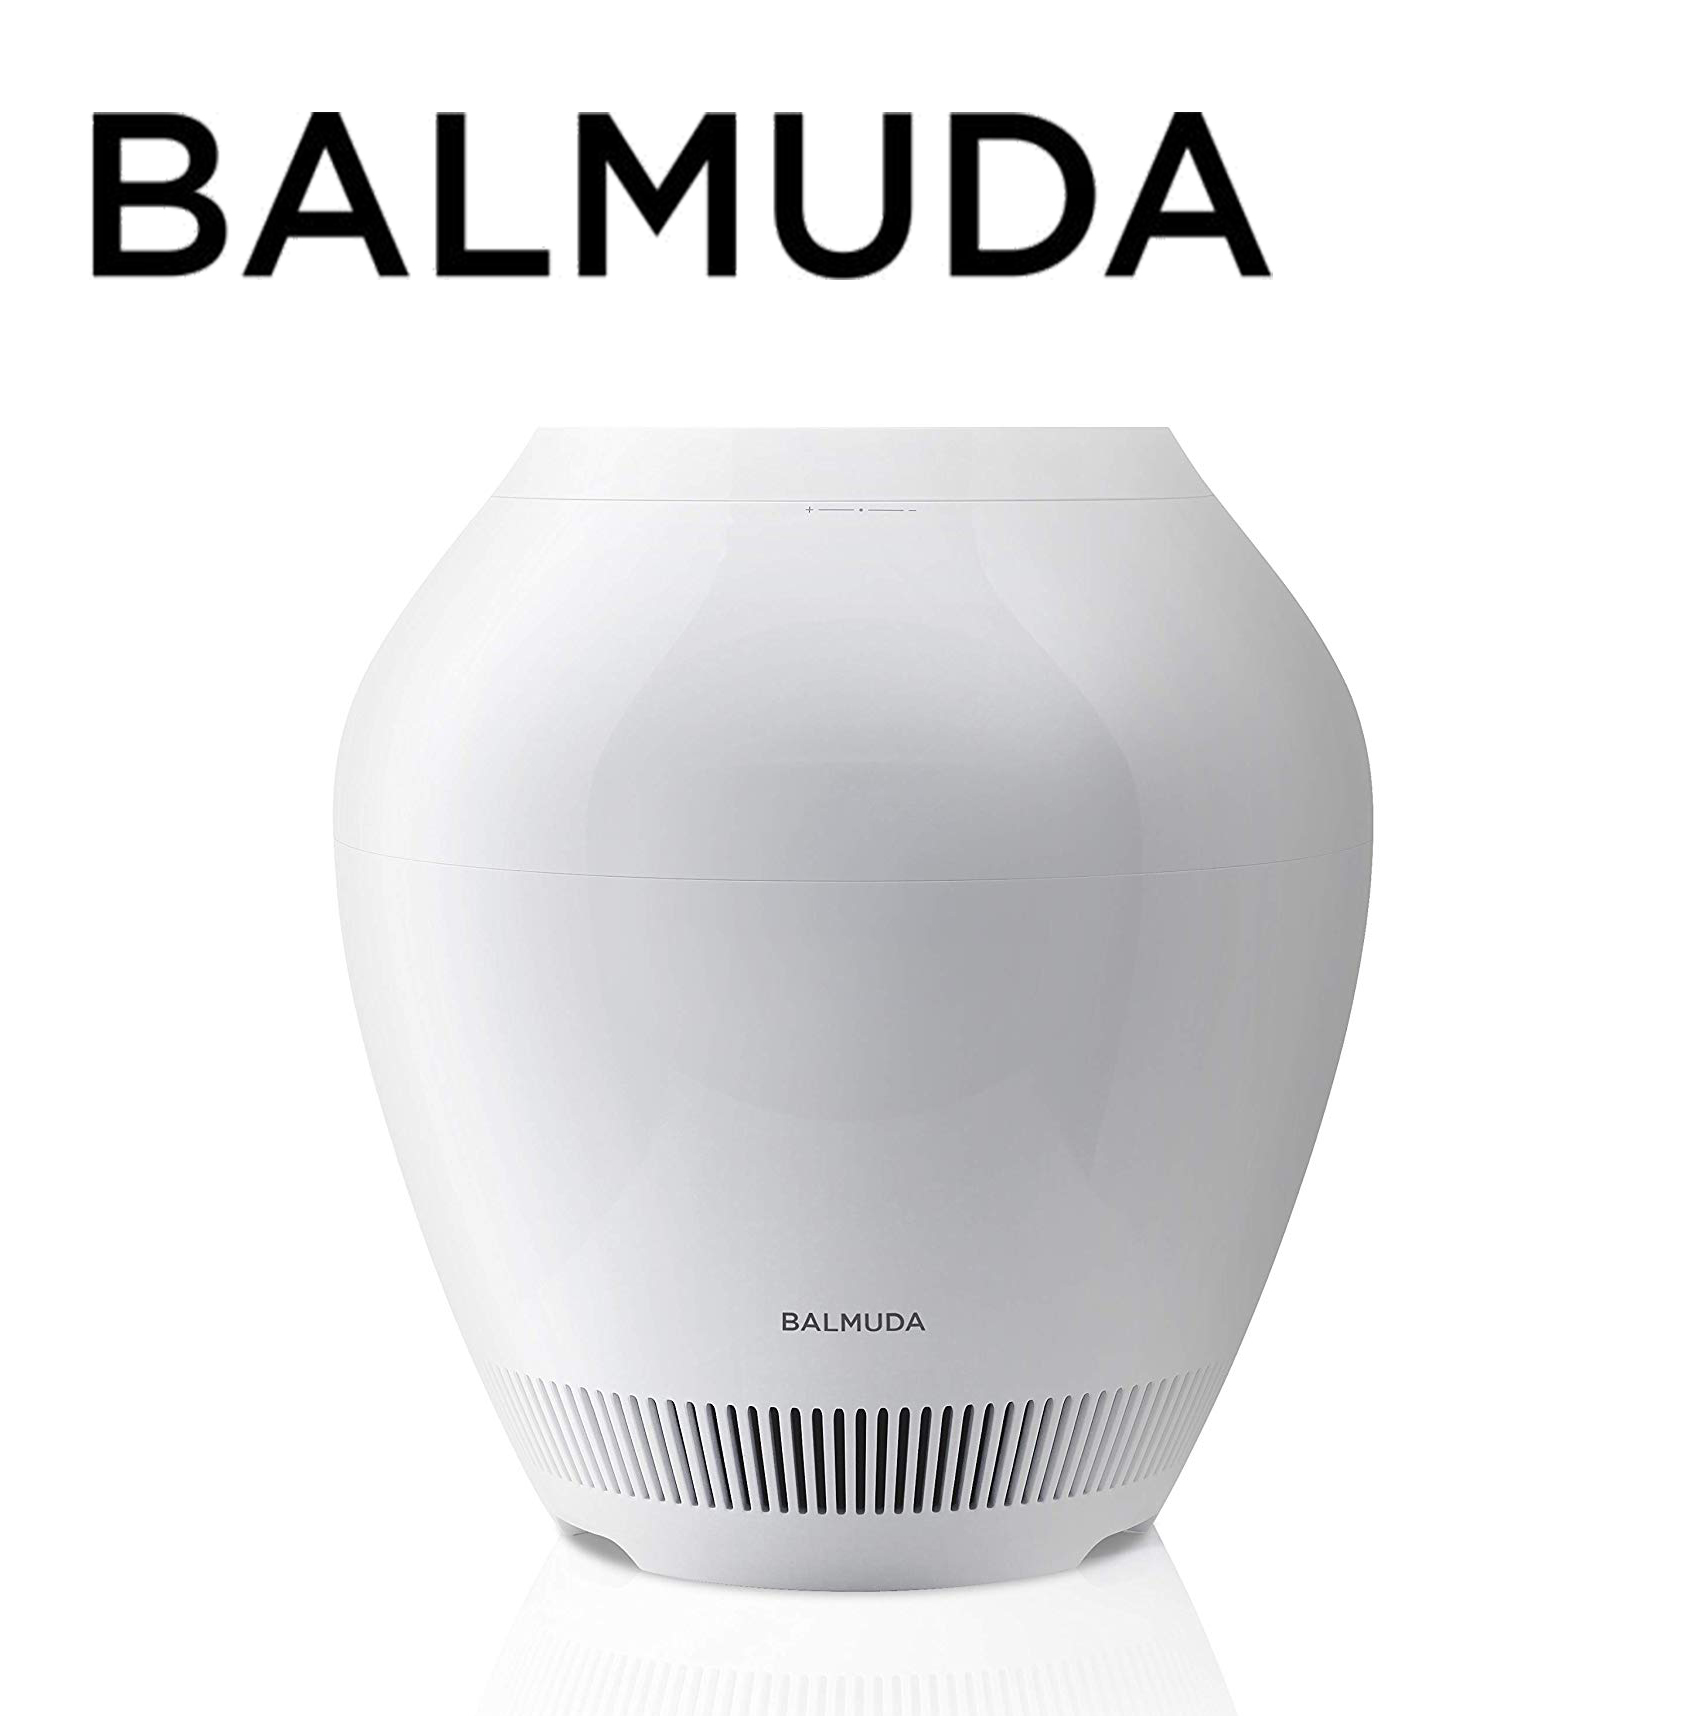 【BALMUDA】 気化式加湿器 Rain Wi-Fiモデル 定価49,680円(税込)